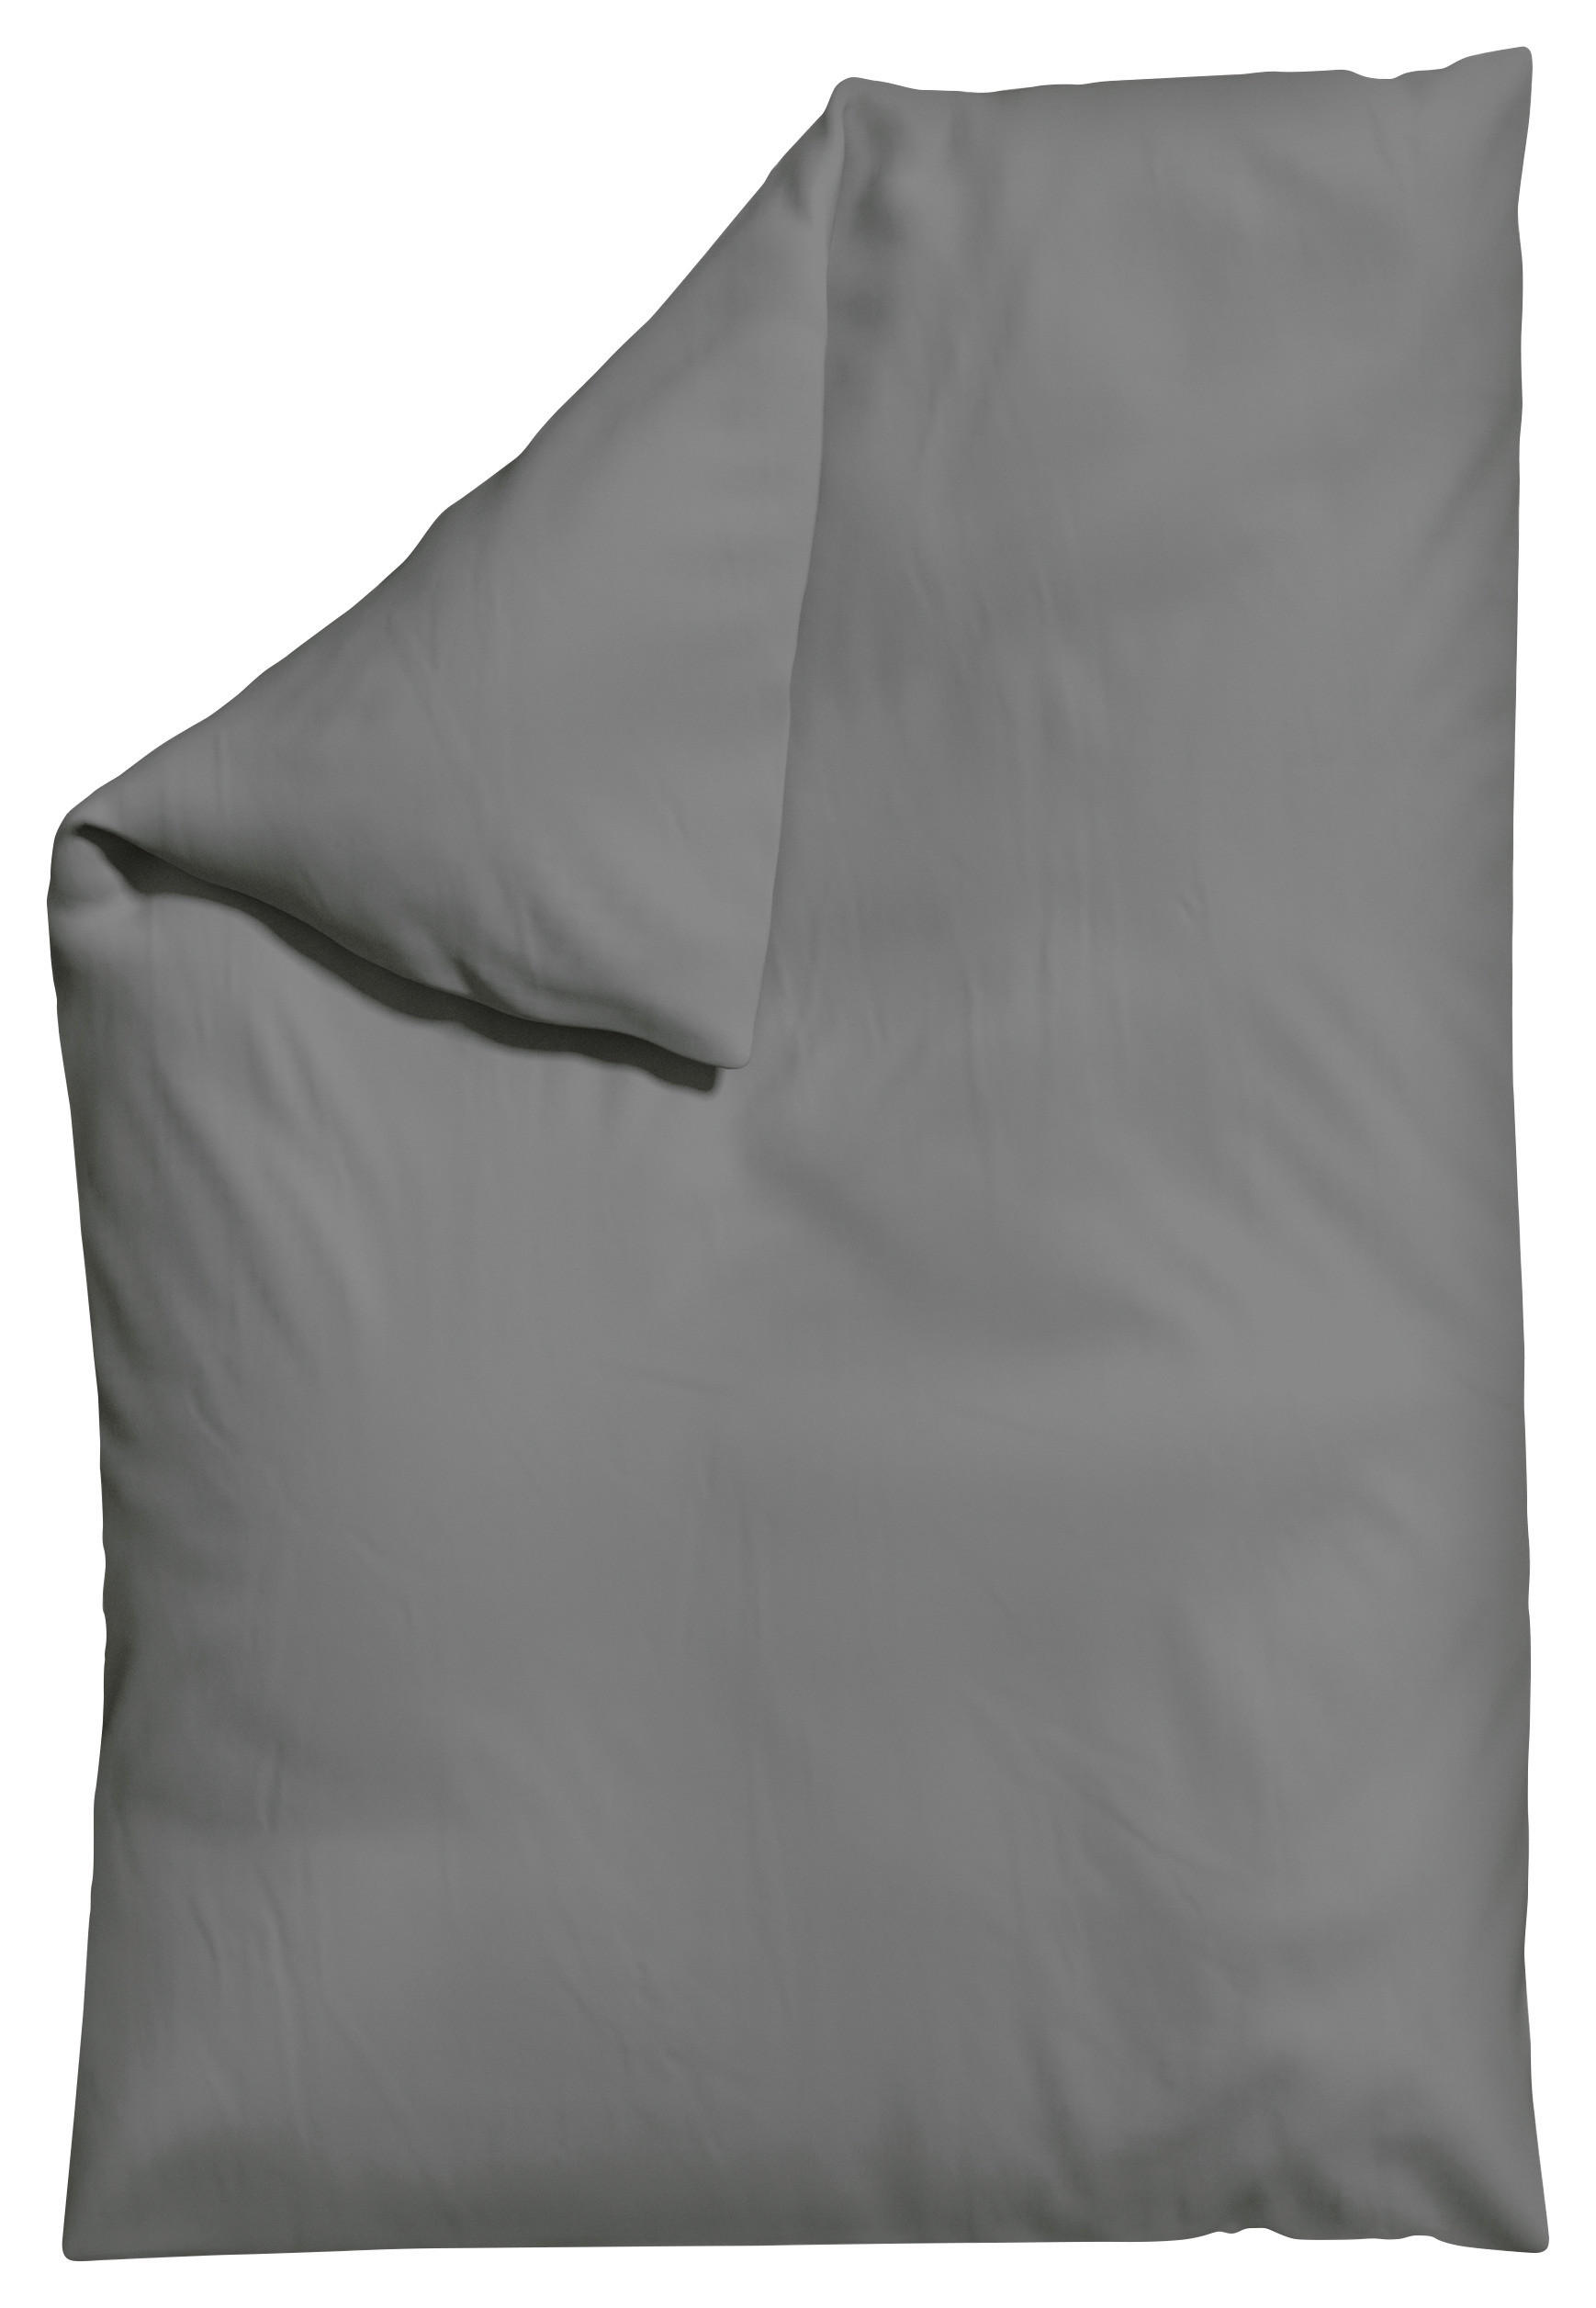 BETTDECKENBEZUG 135-140/200 cm  - Grau, Basics, Textil (135-140/200cm) - Schlafgut